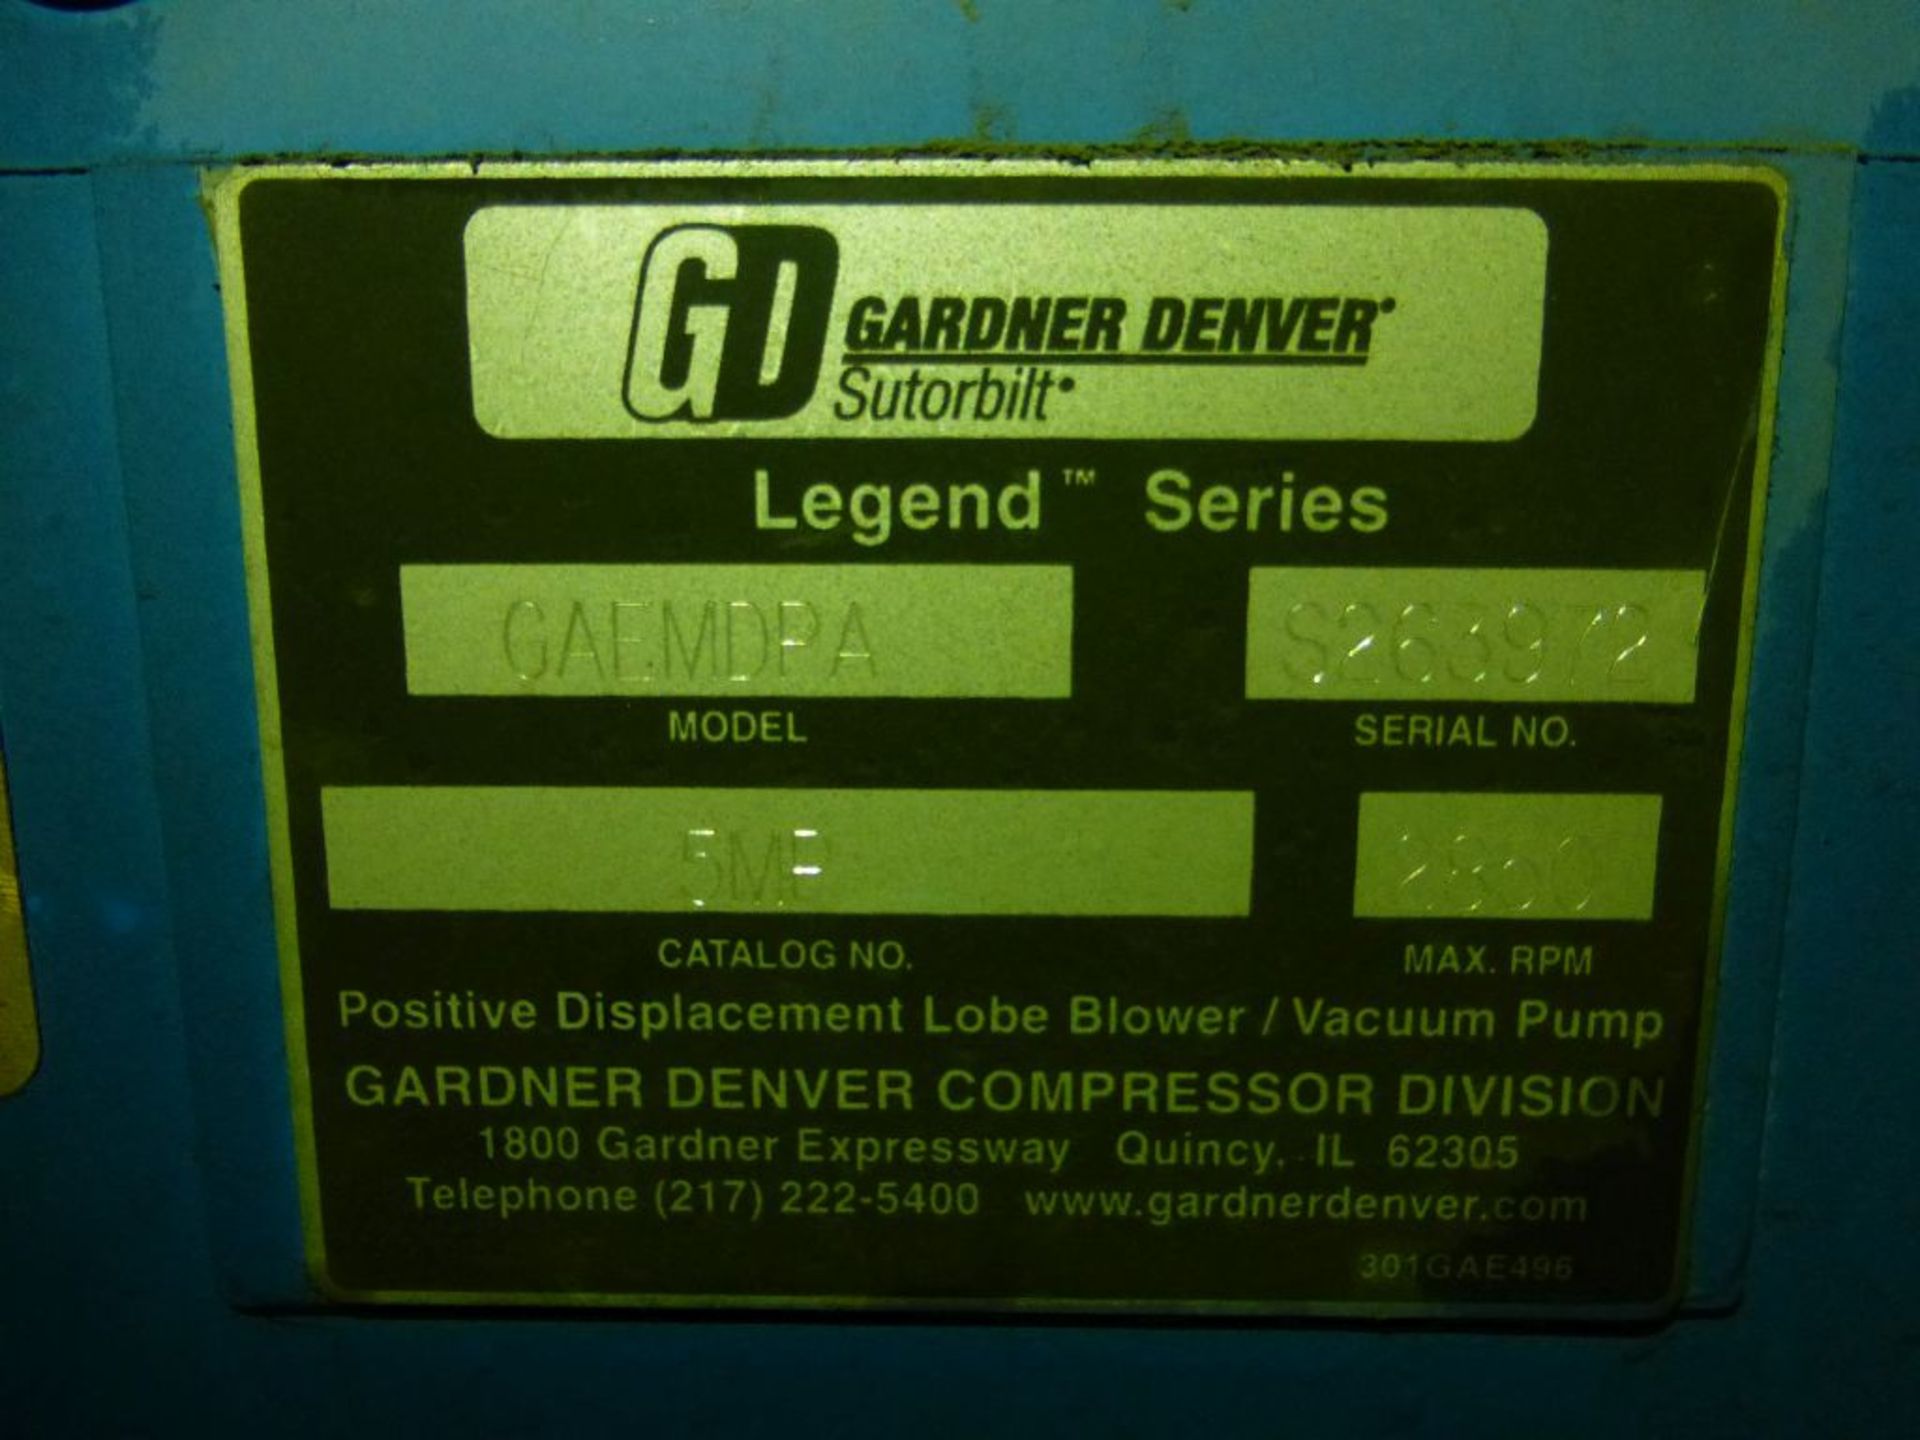 Gardner Denver Sutorbilt 25HP Vacuum Pump with Enclosure | Model No. GAEMDPA; Cat No. 5MP; 2850 RPM - Image 6 of 8